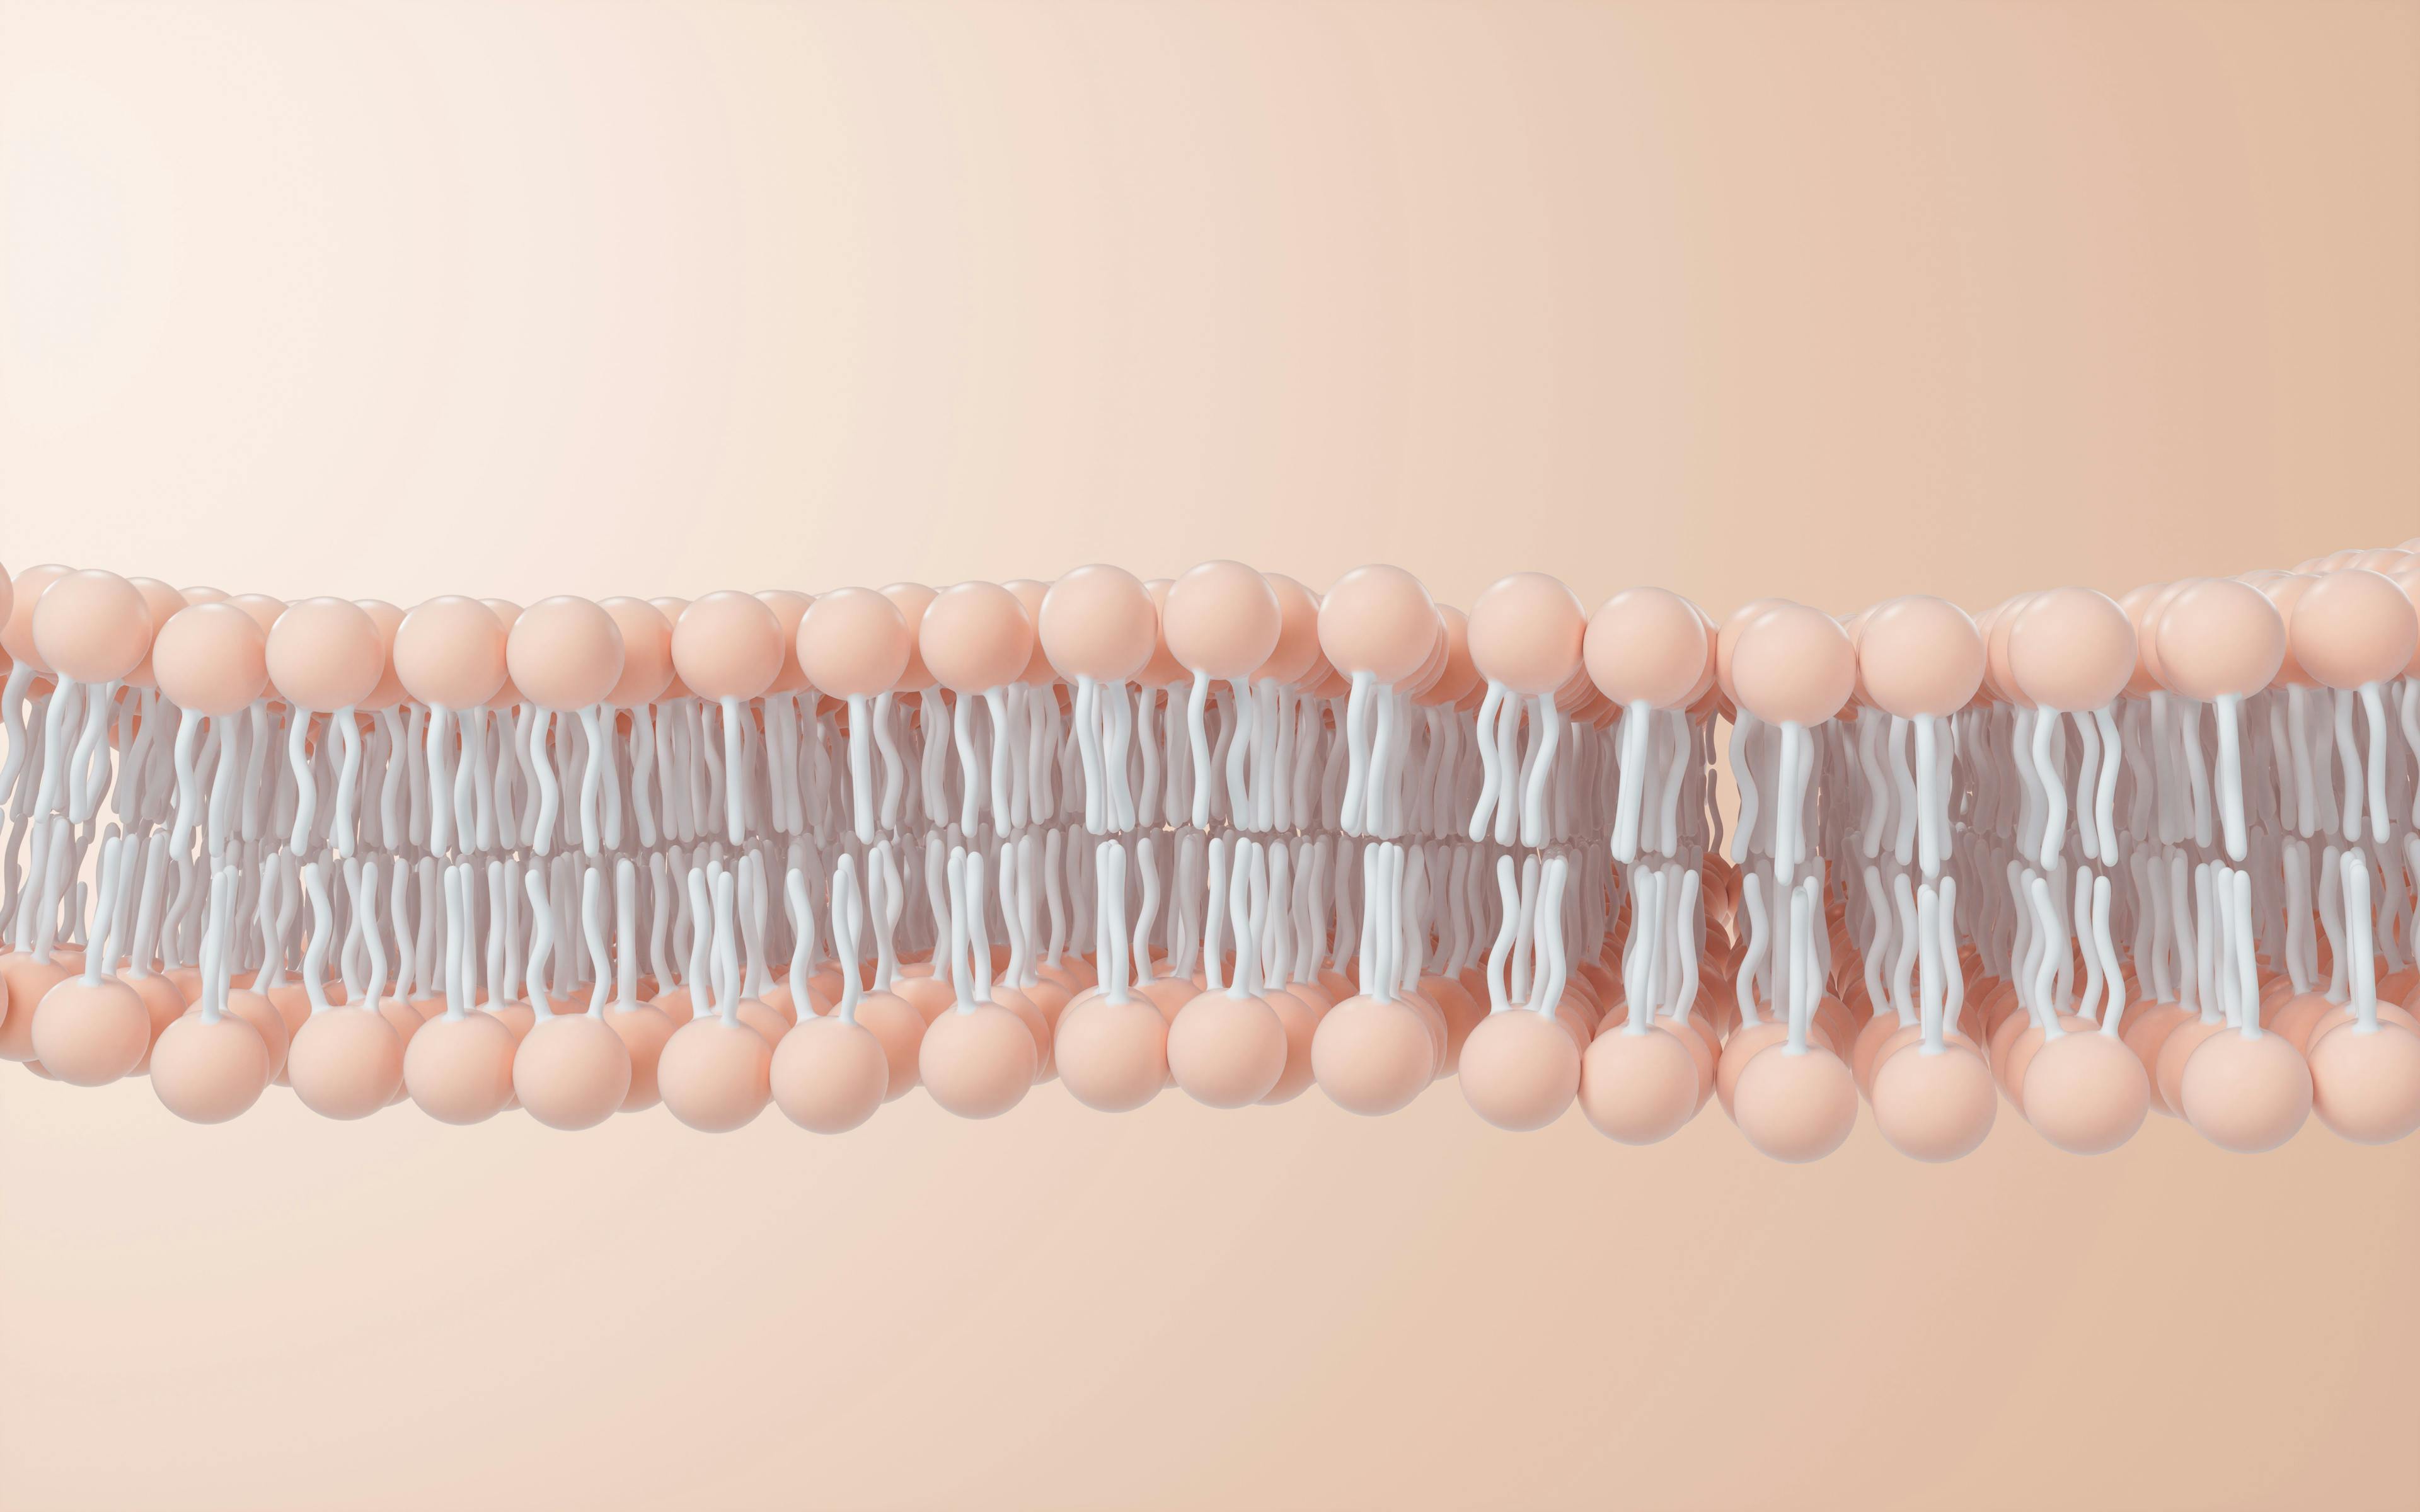 Cell membrane structure background, 3d rendering. | Image Credit: © Vink Fan - stock.adobe.com